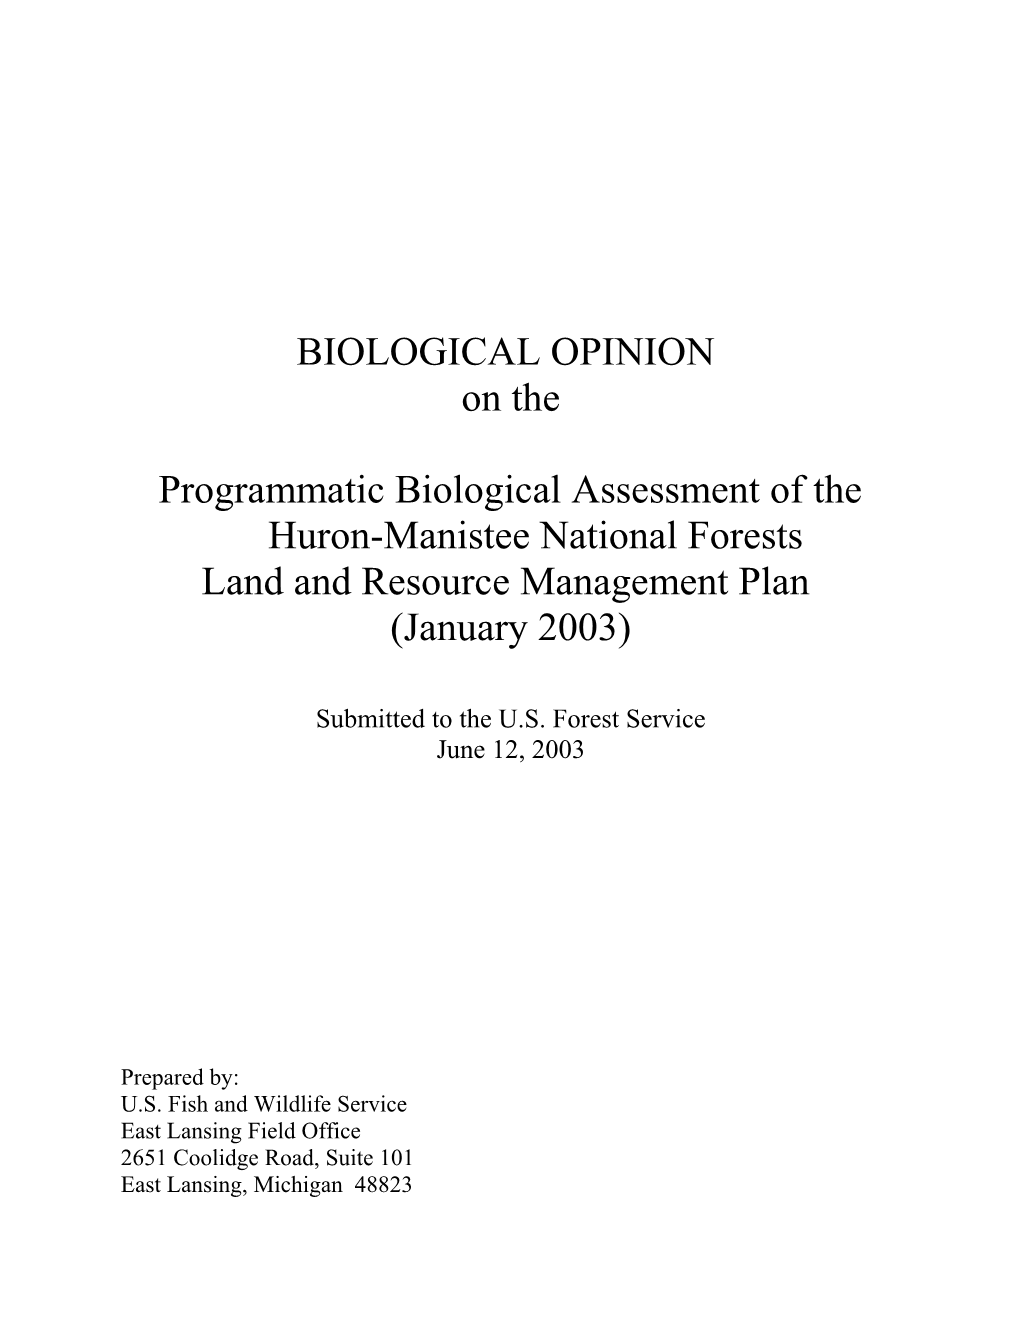 Edited Draft HMNF Biological Opinion 5.19.03